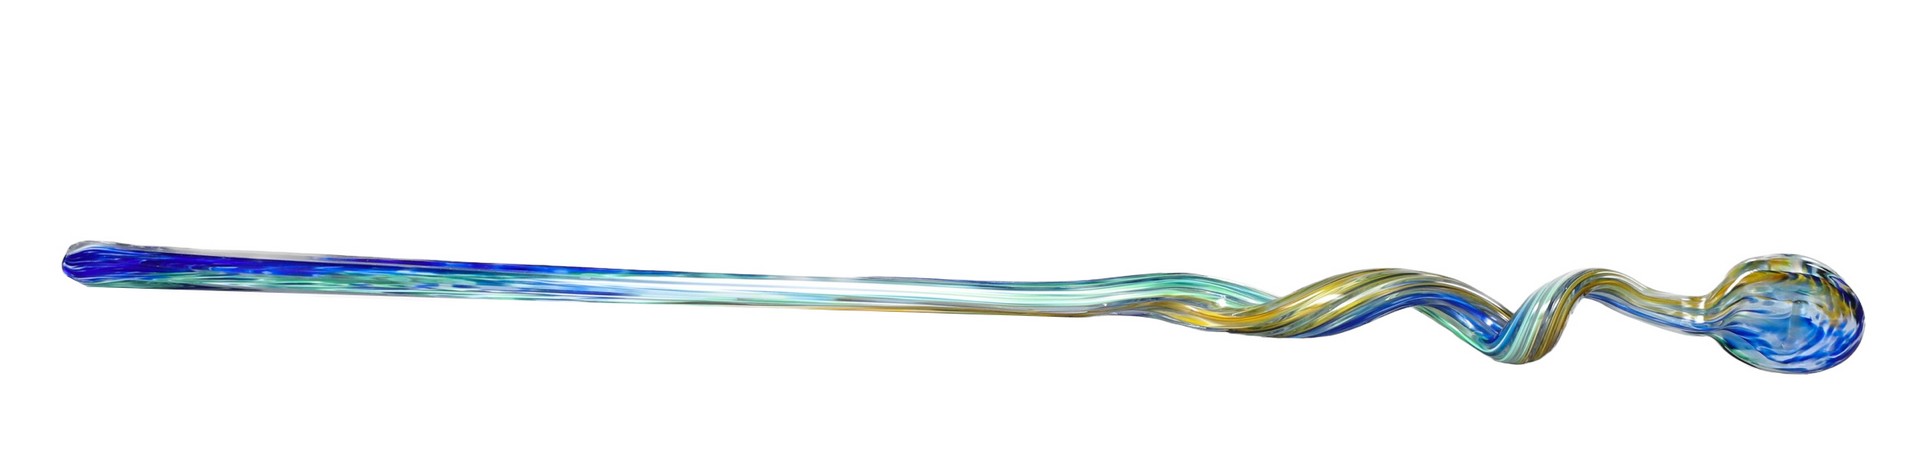 Glass walking stick, curved serpentine